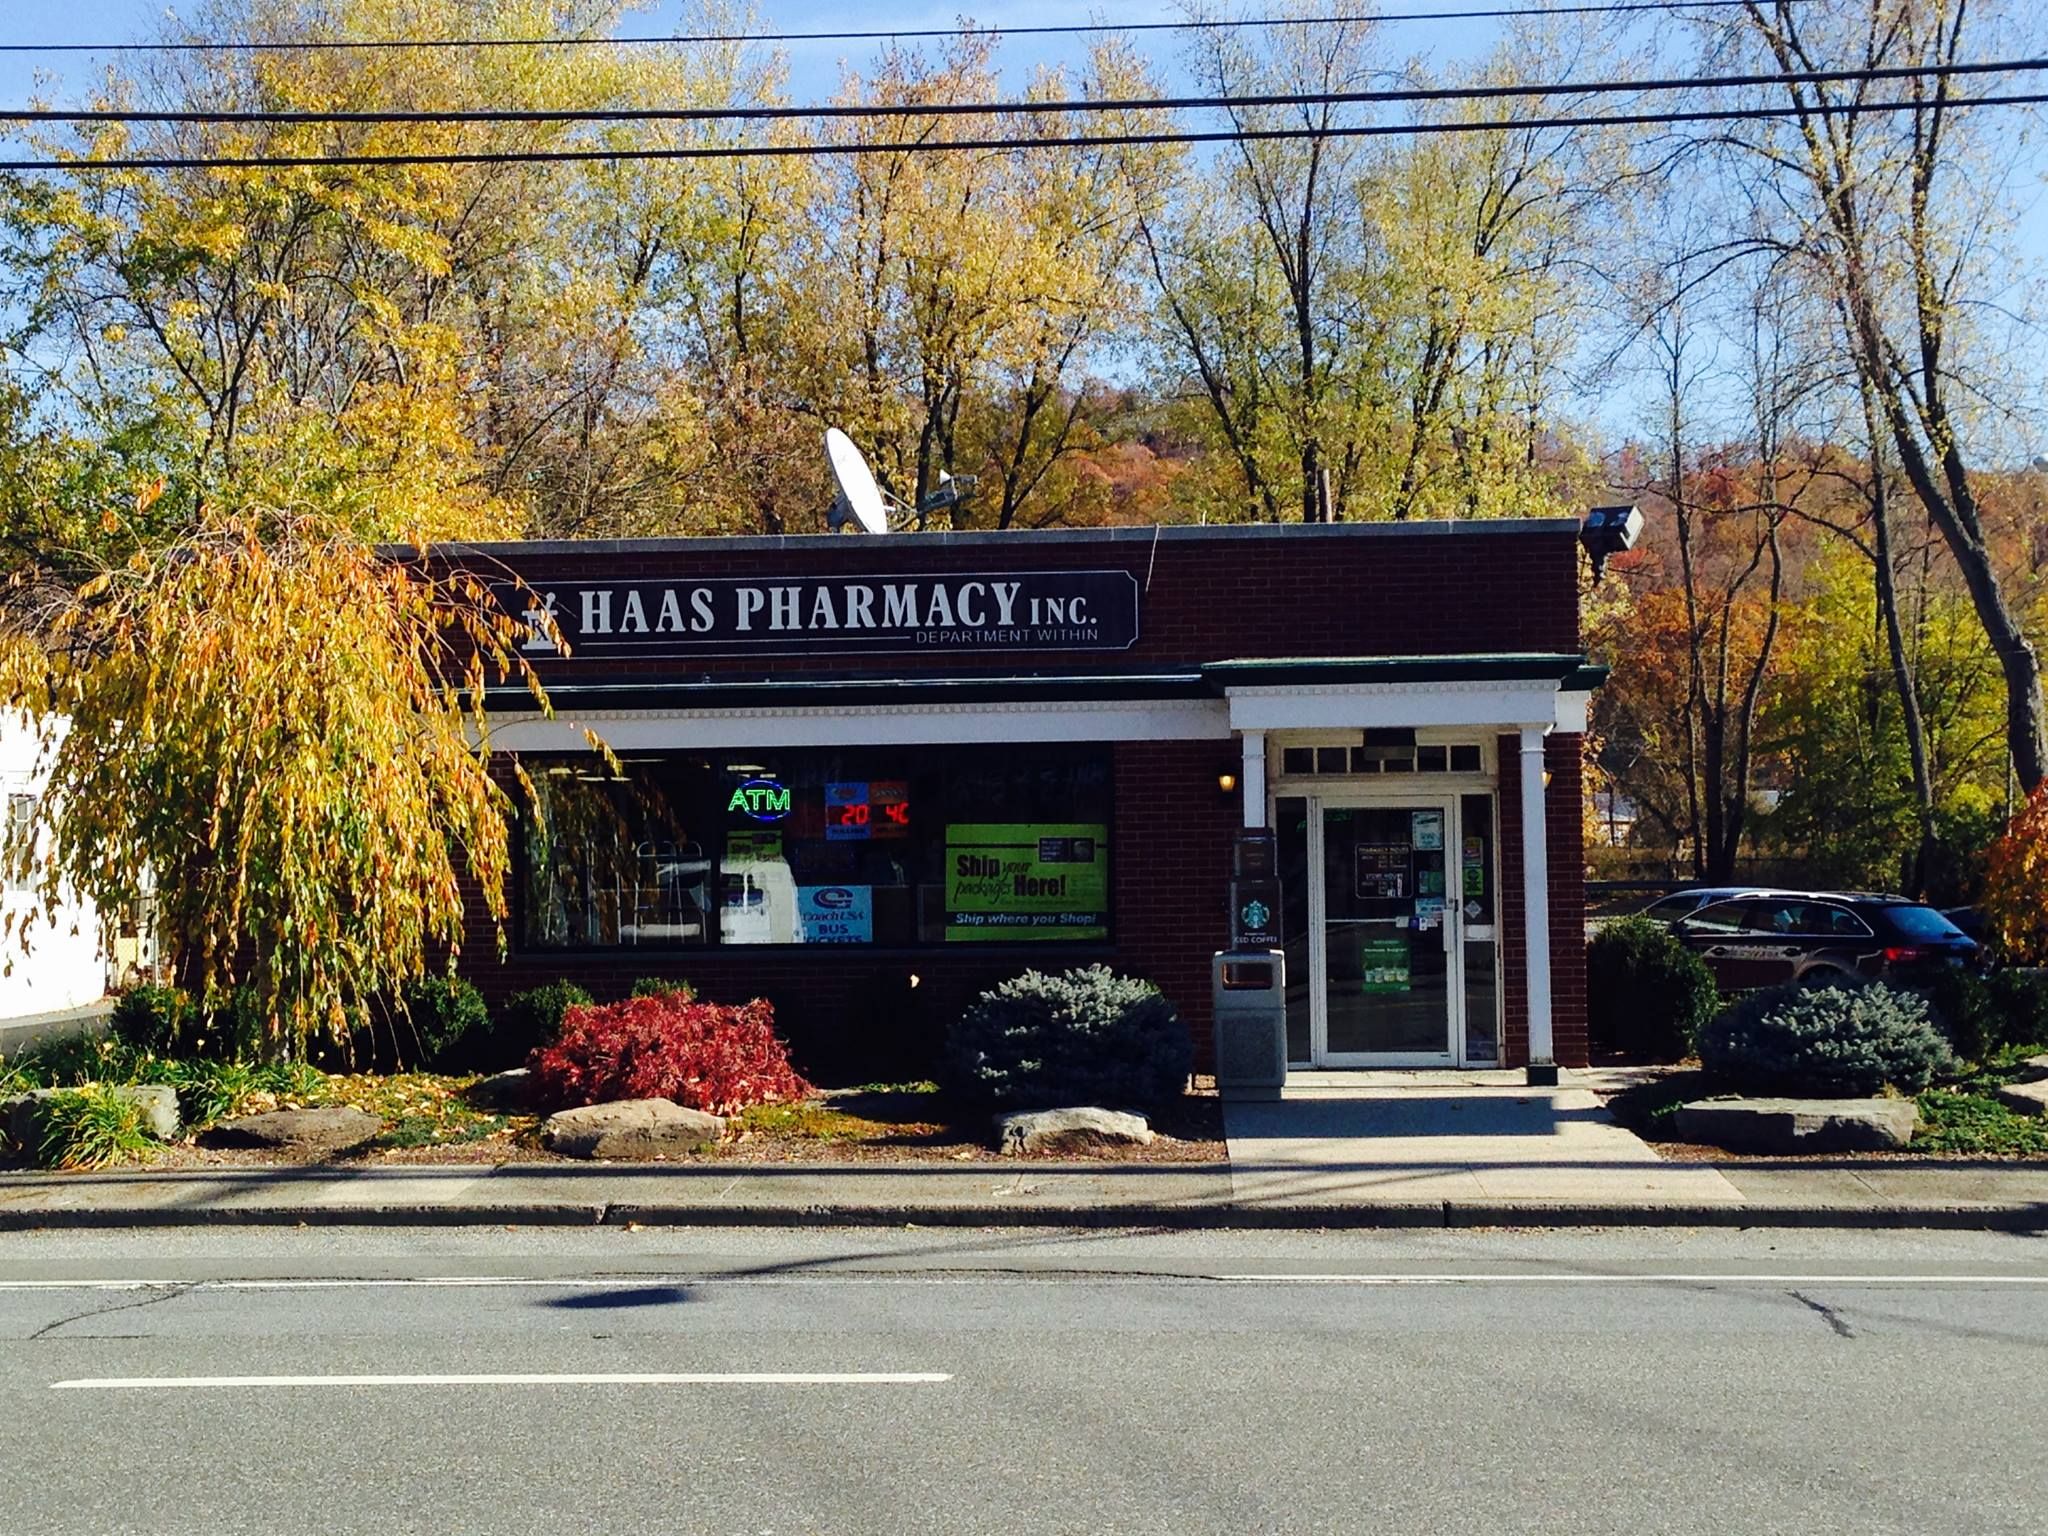 Welcome to Haas Pharmacy